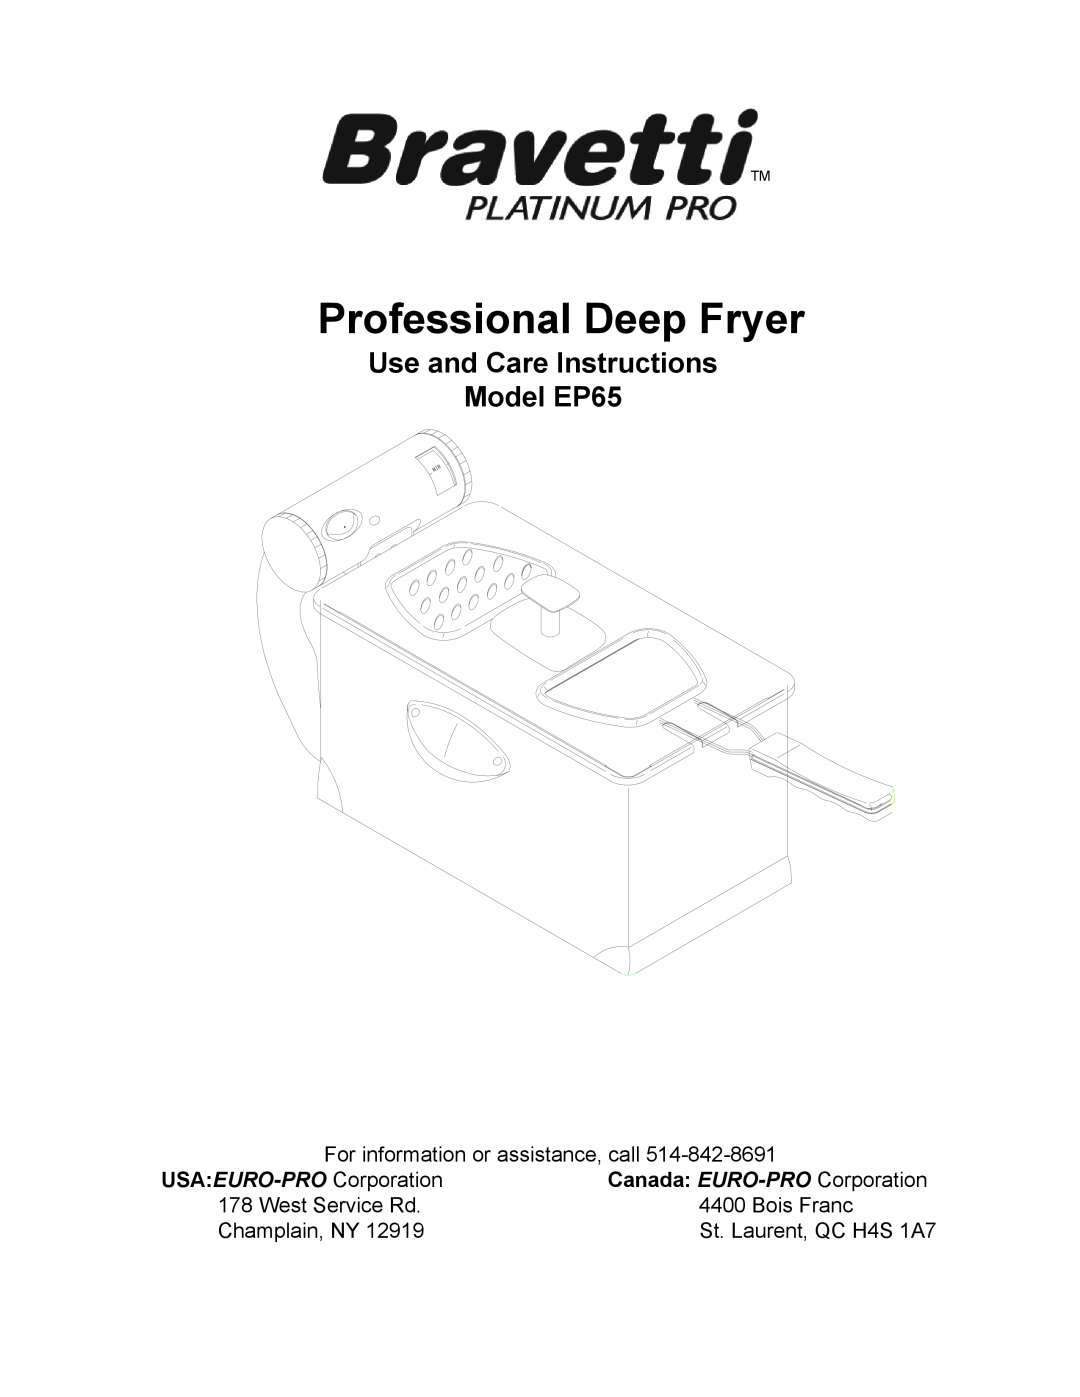 Bravetti manual Use and Care Instructions Model EP65, Professional Deep Fryer, EURO-PRO Operating LLC Boston, MA 